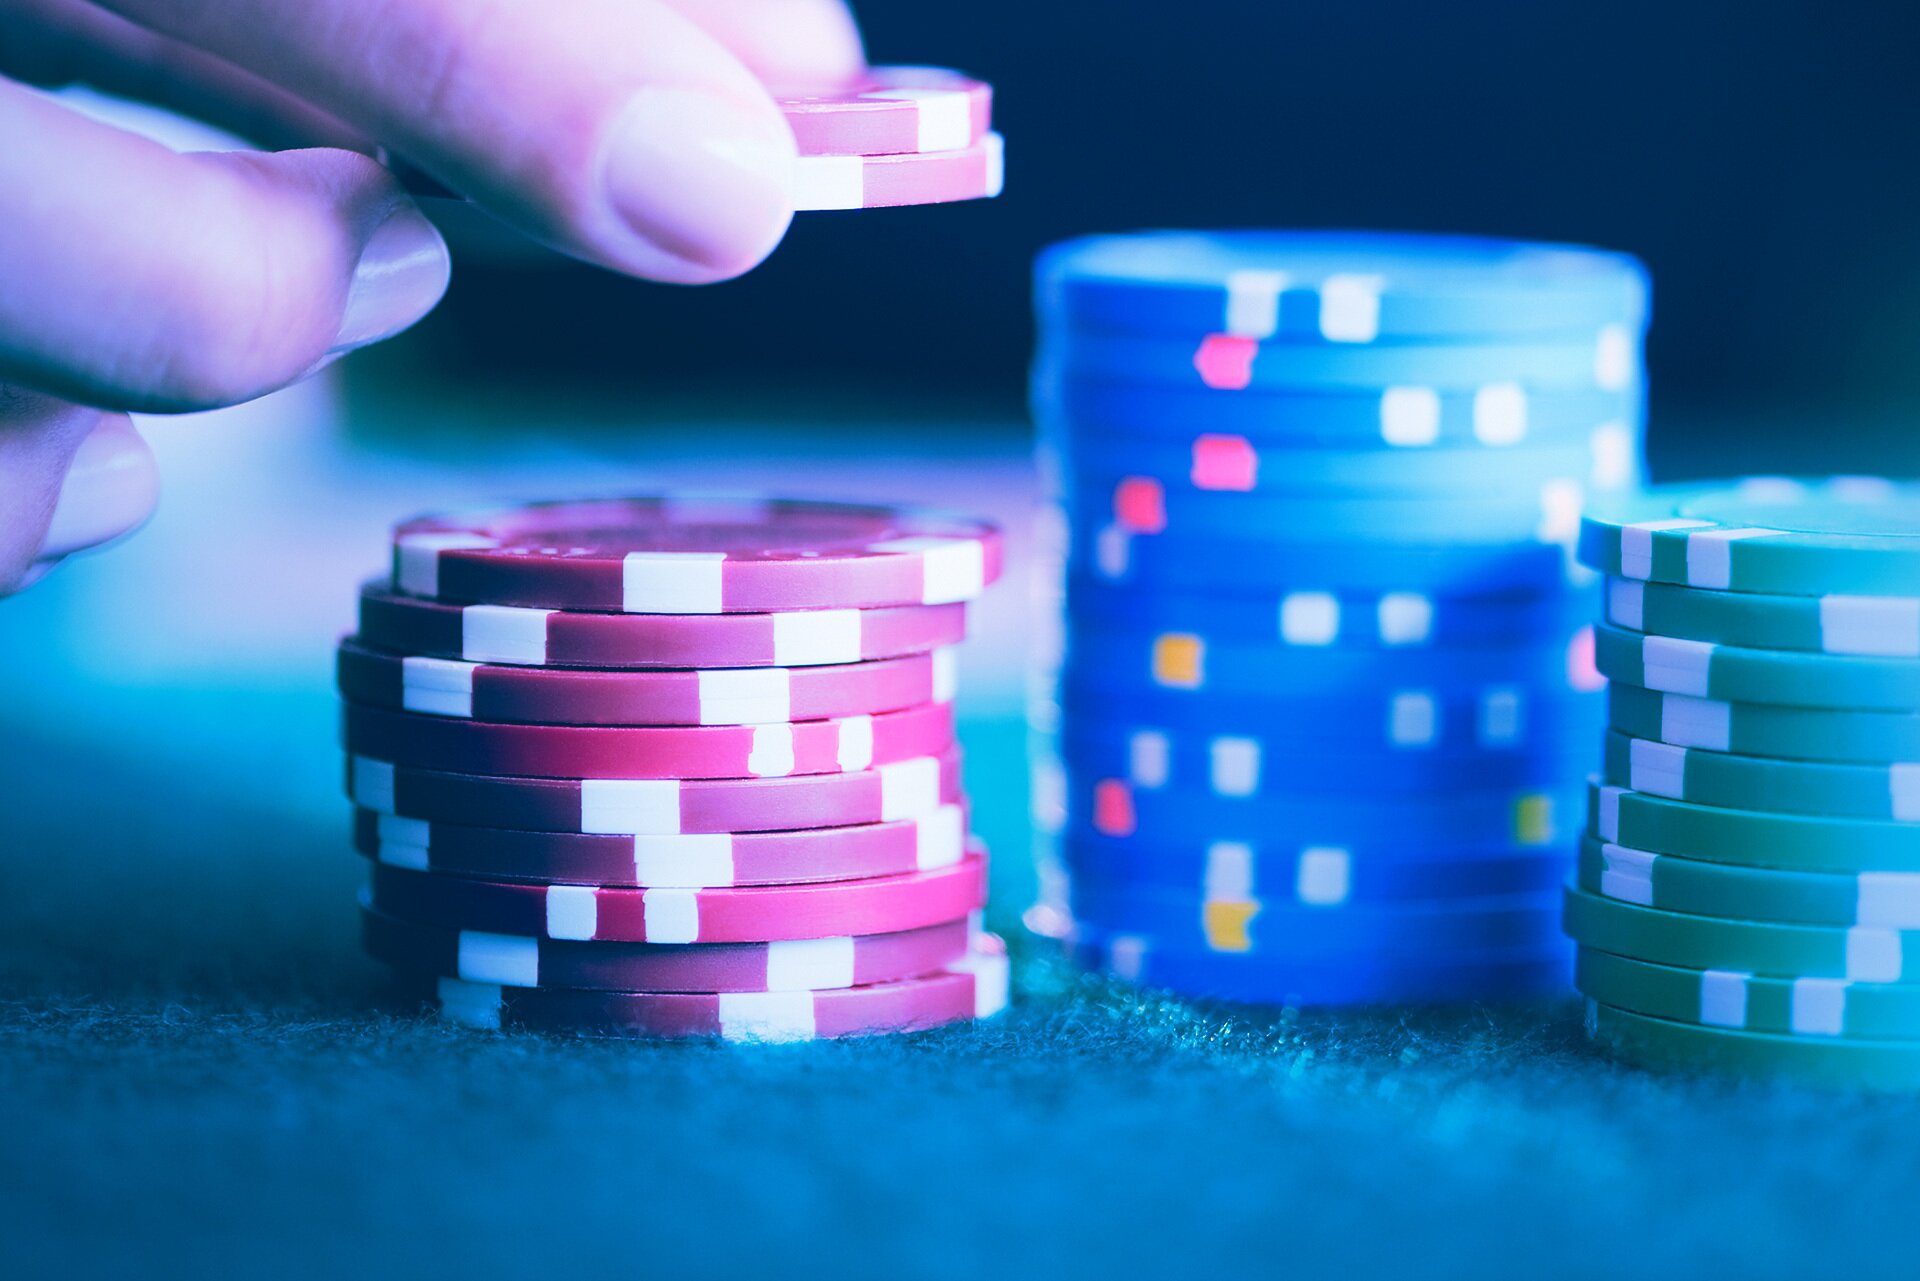 gamble apps win real money